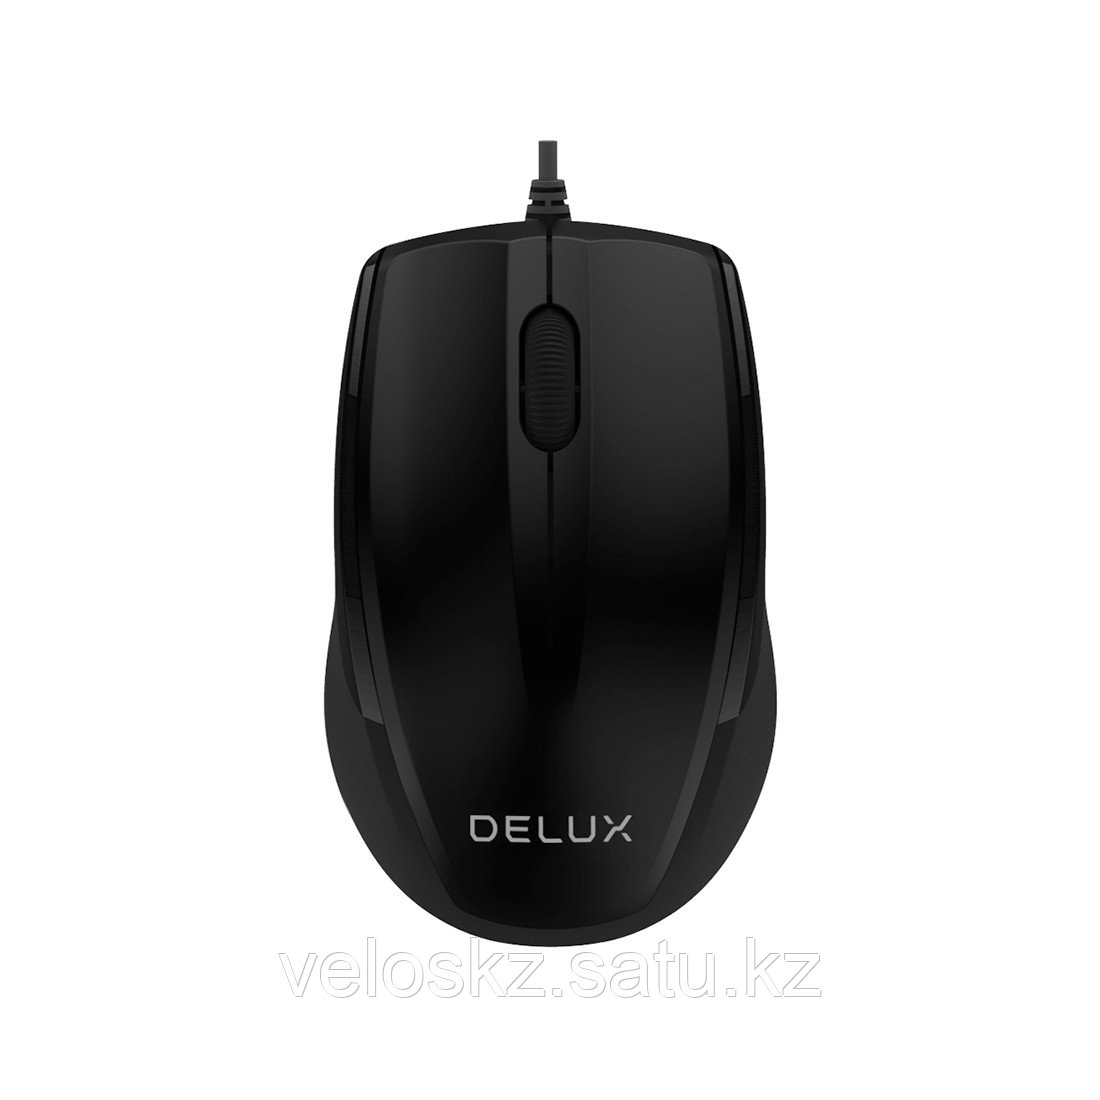 Delux Мышь проводная Delux DLM-321OUB, USB, 1000 dpi, Длина провода 1,6м